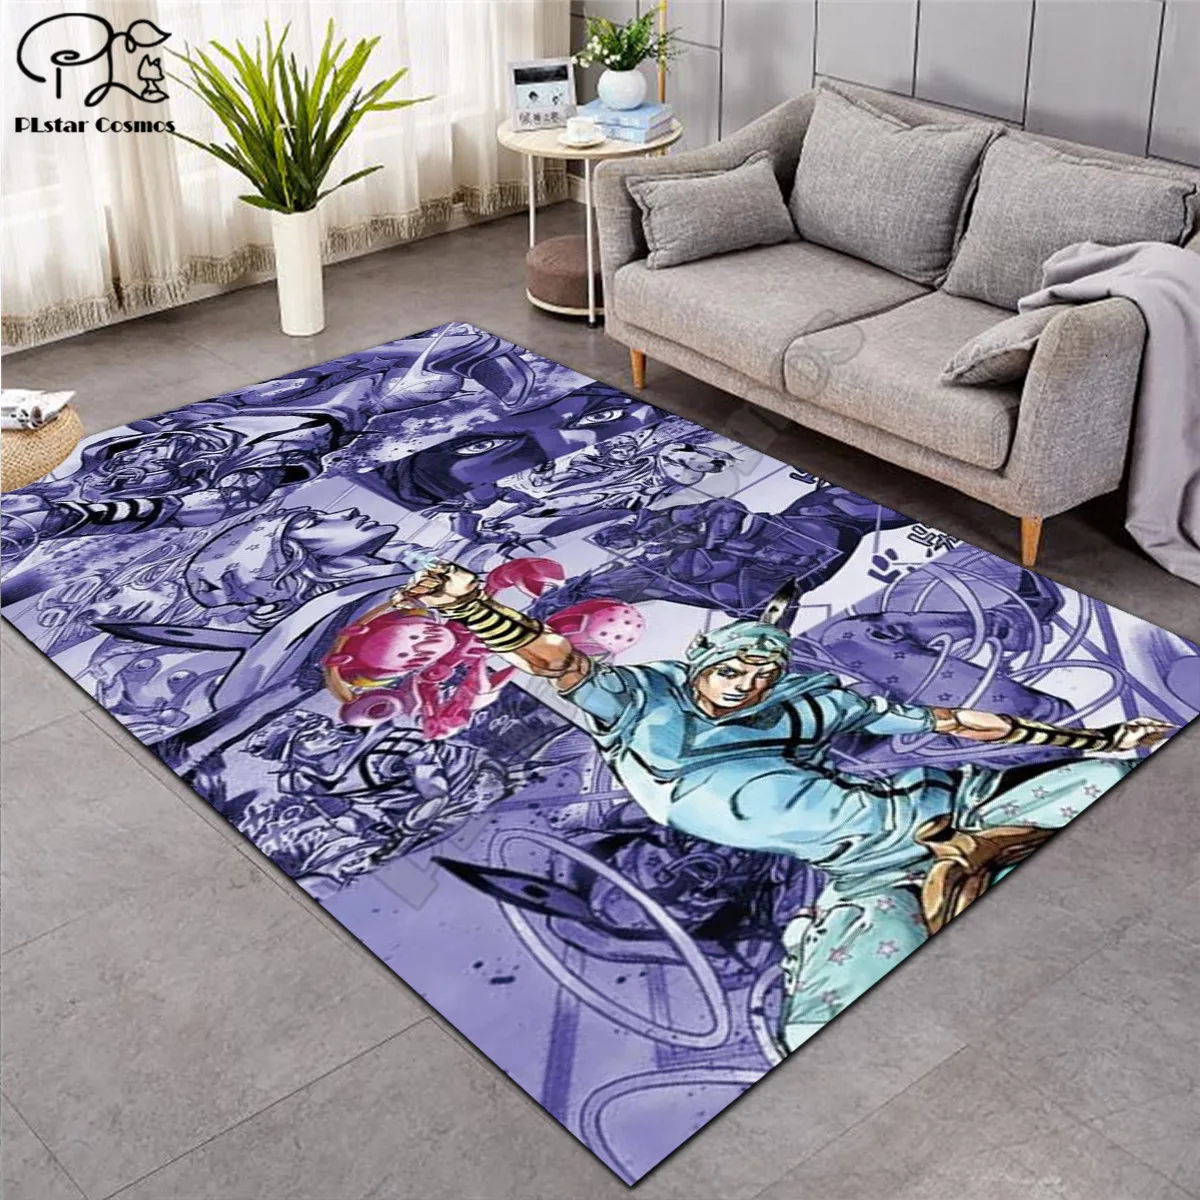 

Anime Cartoon character pattern Square Anti-Skid Area Floor Mat 3D Rug Non-slip Mat Dining Room Living Room Soft Bedroom Carpet